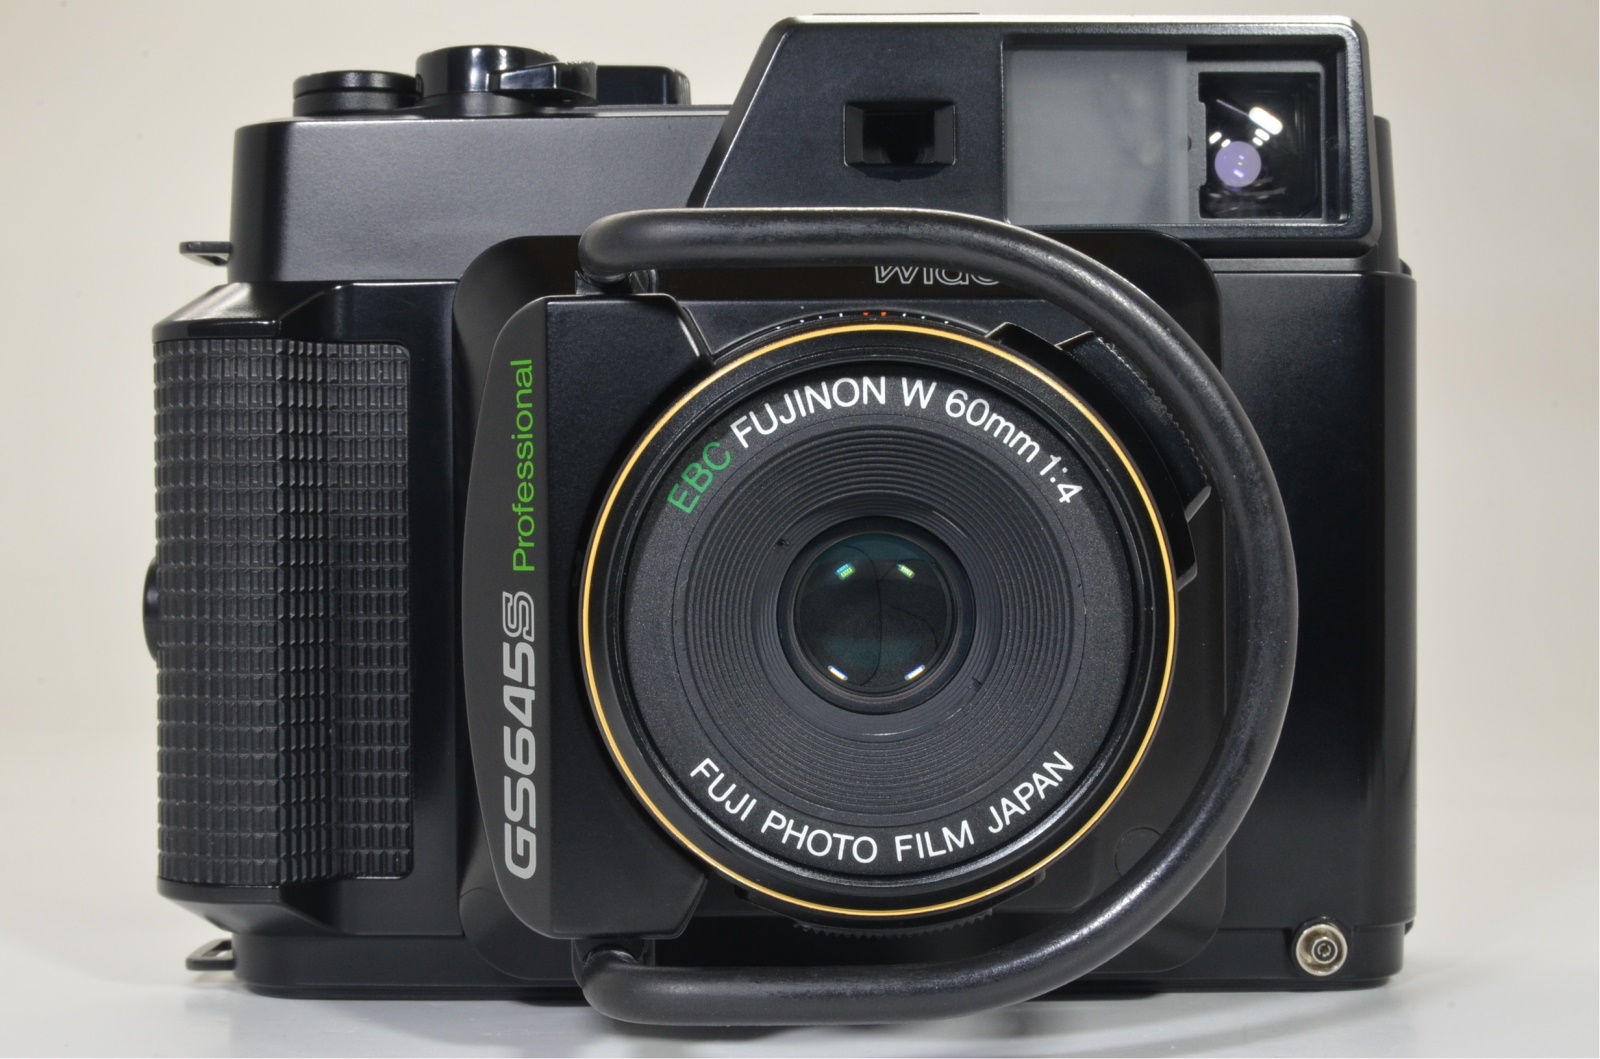 Fuji Fujifilm GS645S Fujinon W 60mm f4 camera from Japan Film